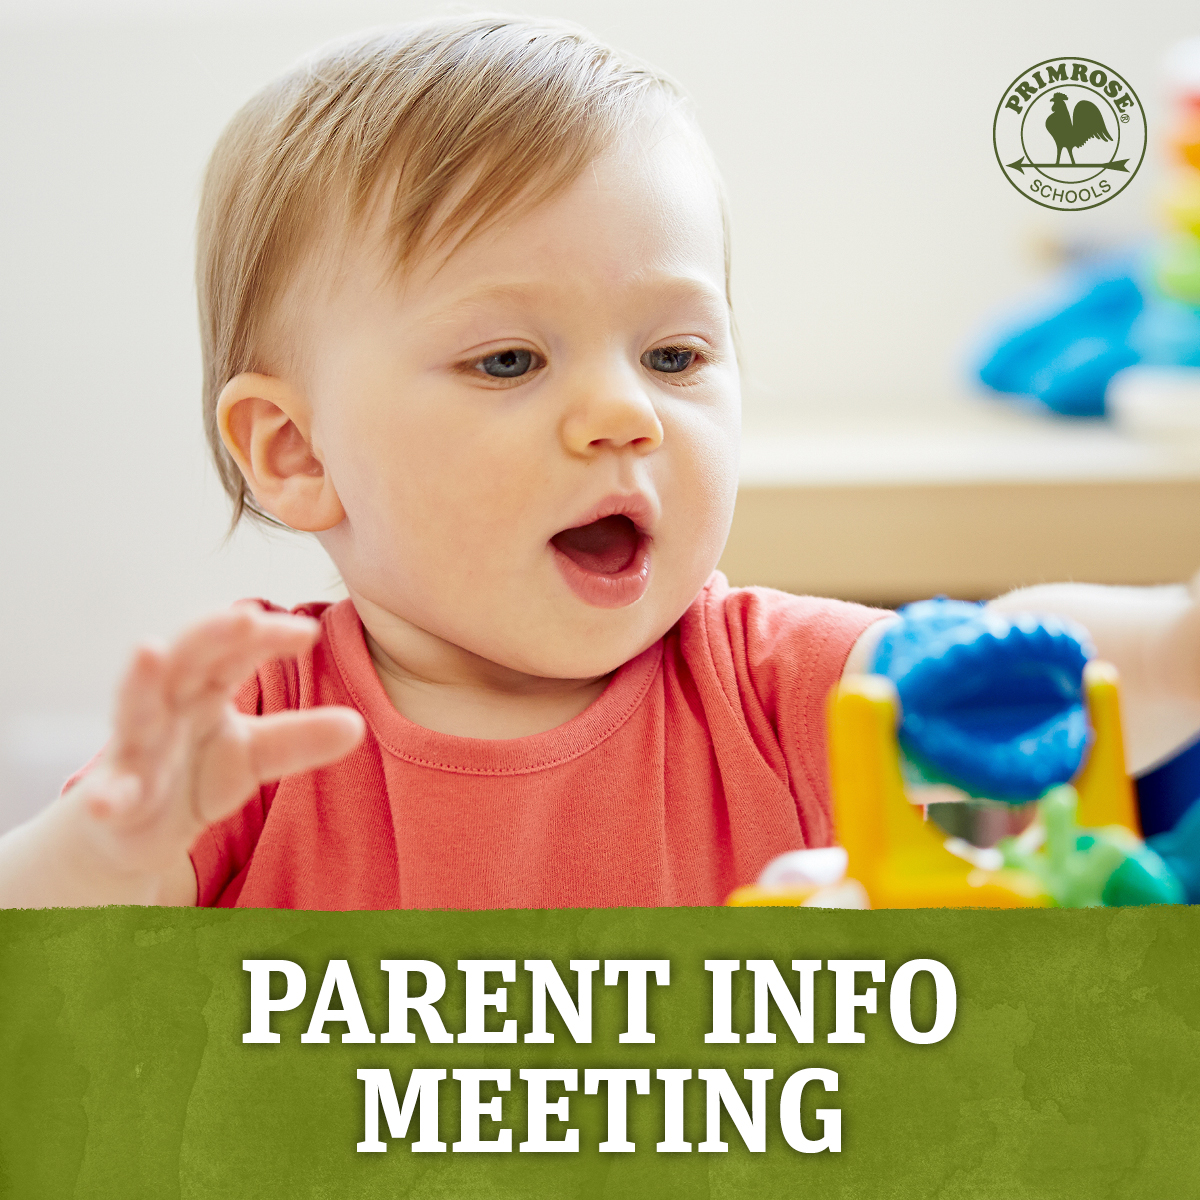 Primrose School of East Cobb - Parent Info Meeting 2